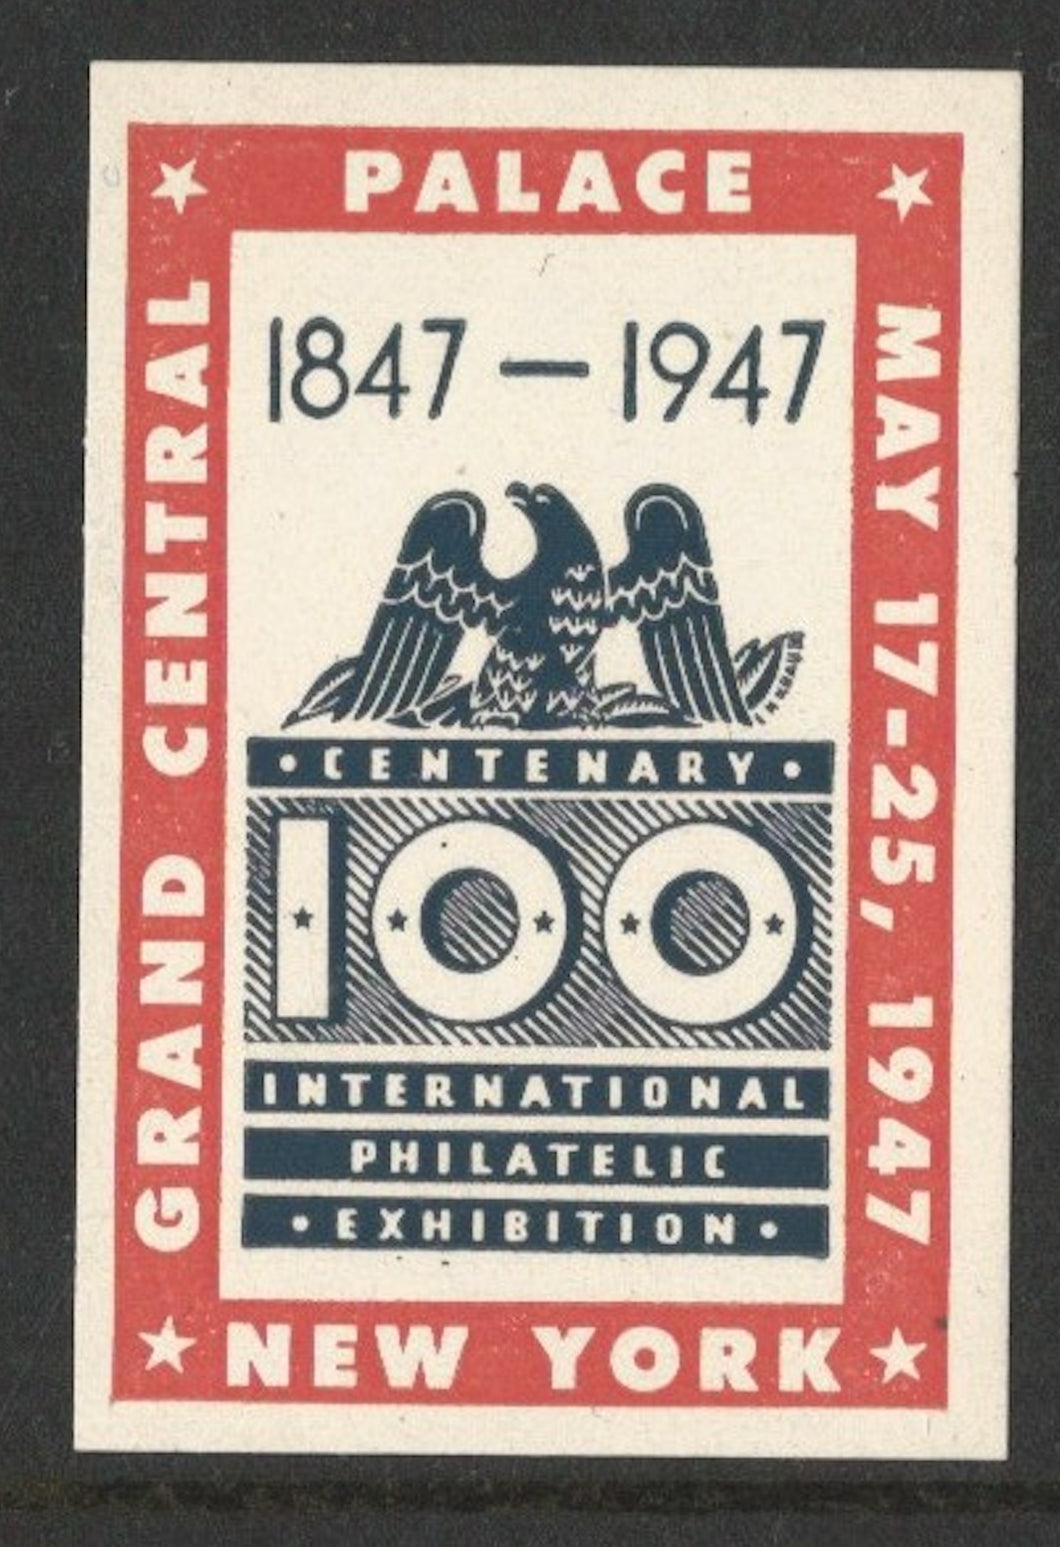 CIPEX, Centenary International Philatelic Exhibition 1947, Grand Central Palace, Manhattan, New York City,  Poster Stamp